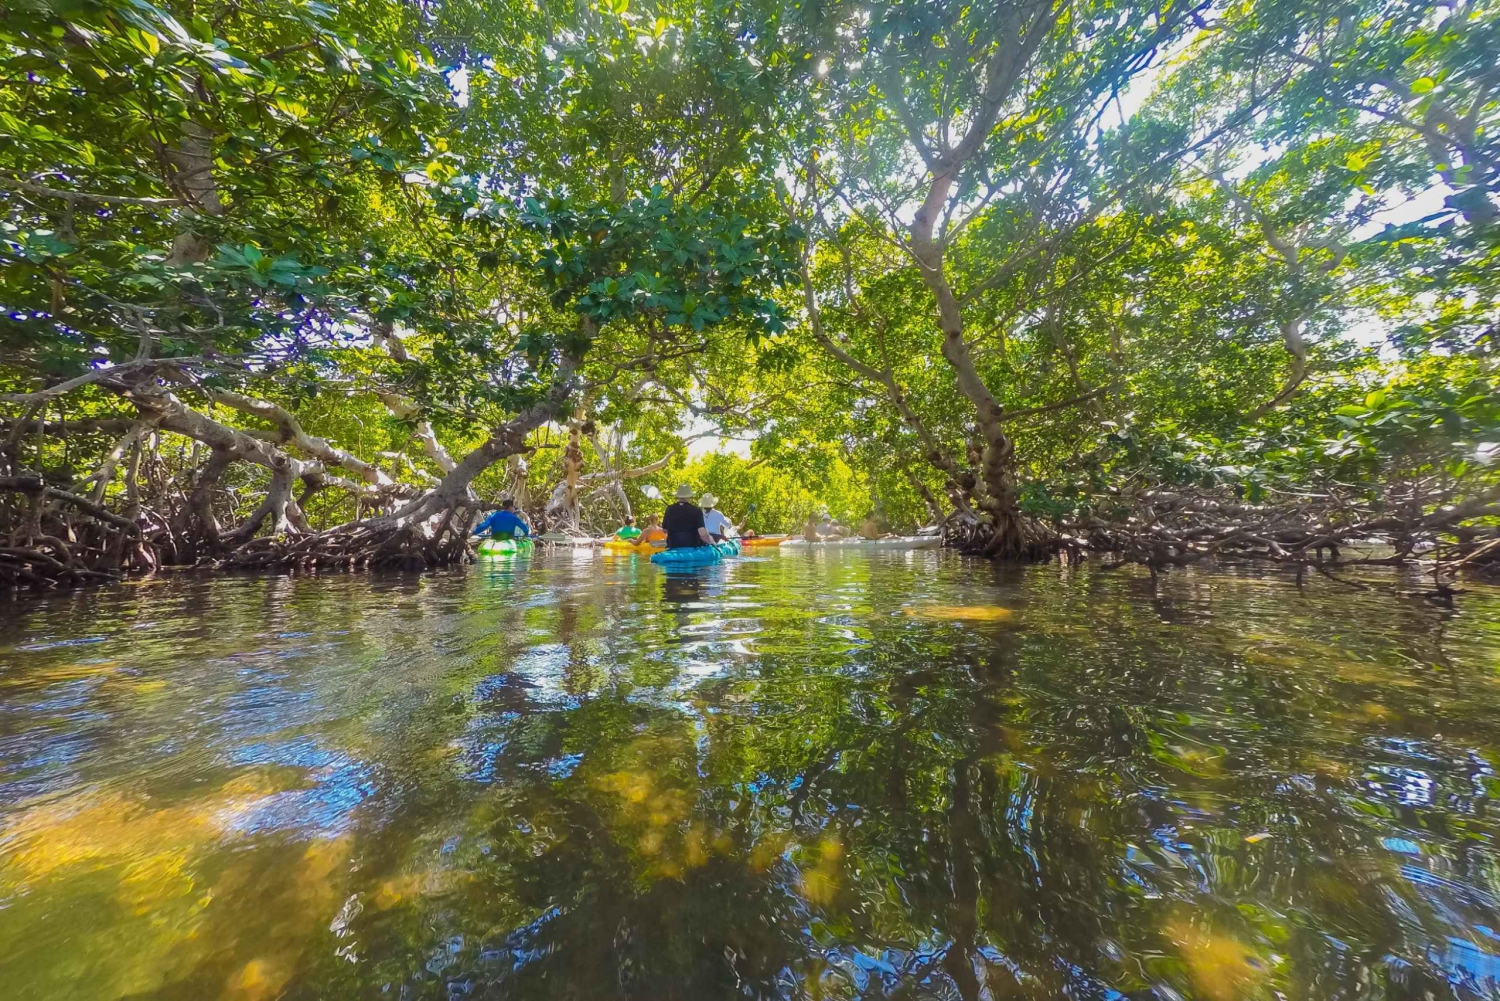 Miami: Key West Tour with Snorkeling & Kayaking